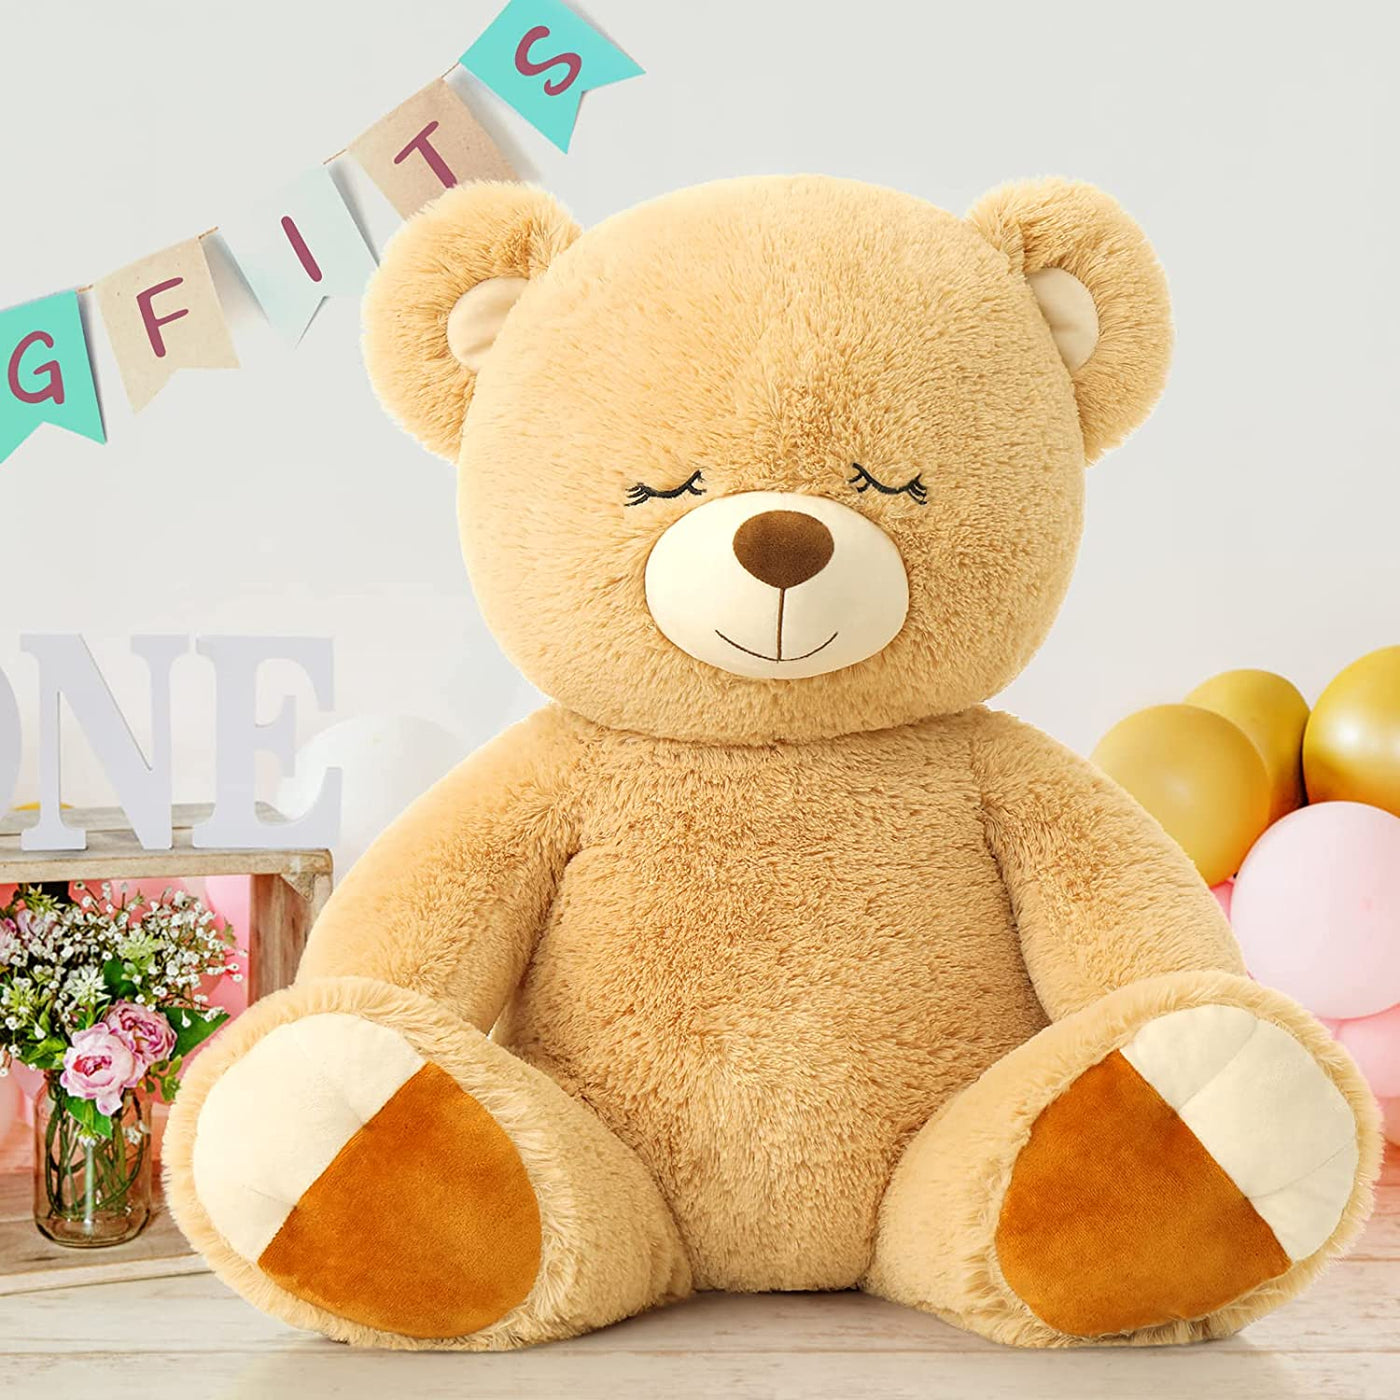 Teddy Bear Stuffed Animal Toy, Light Brown, 23.6 Inches - MorisMos Plush Toys